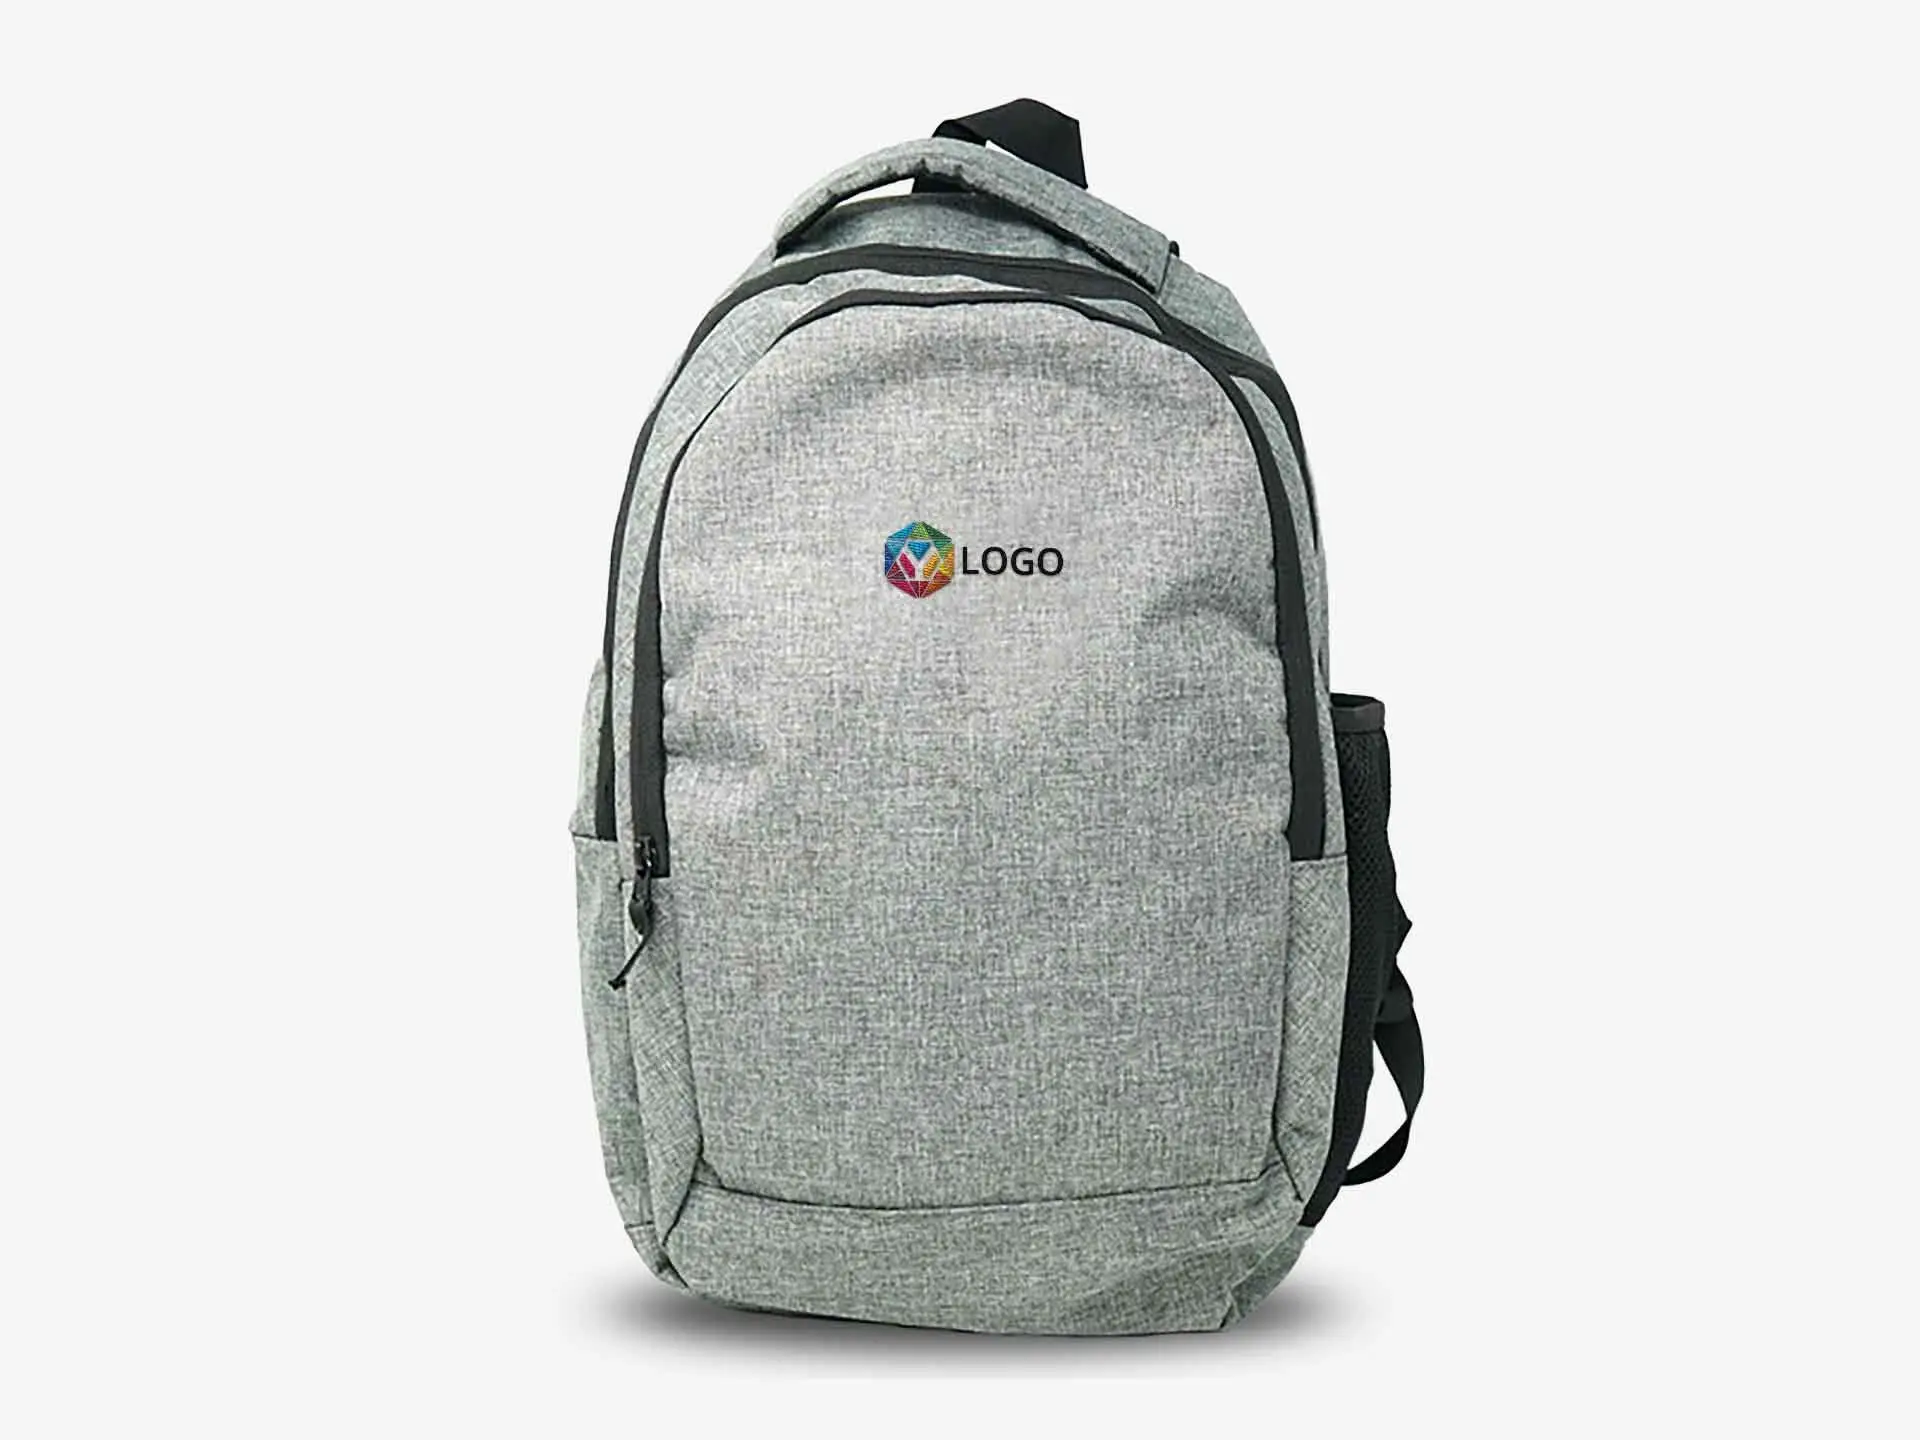 Prominent Laptop Bag